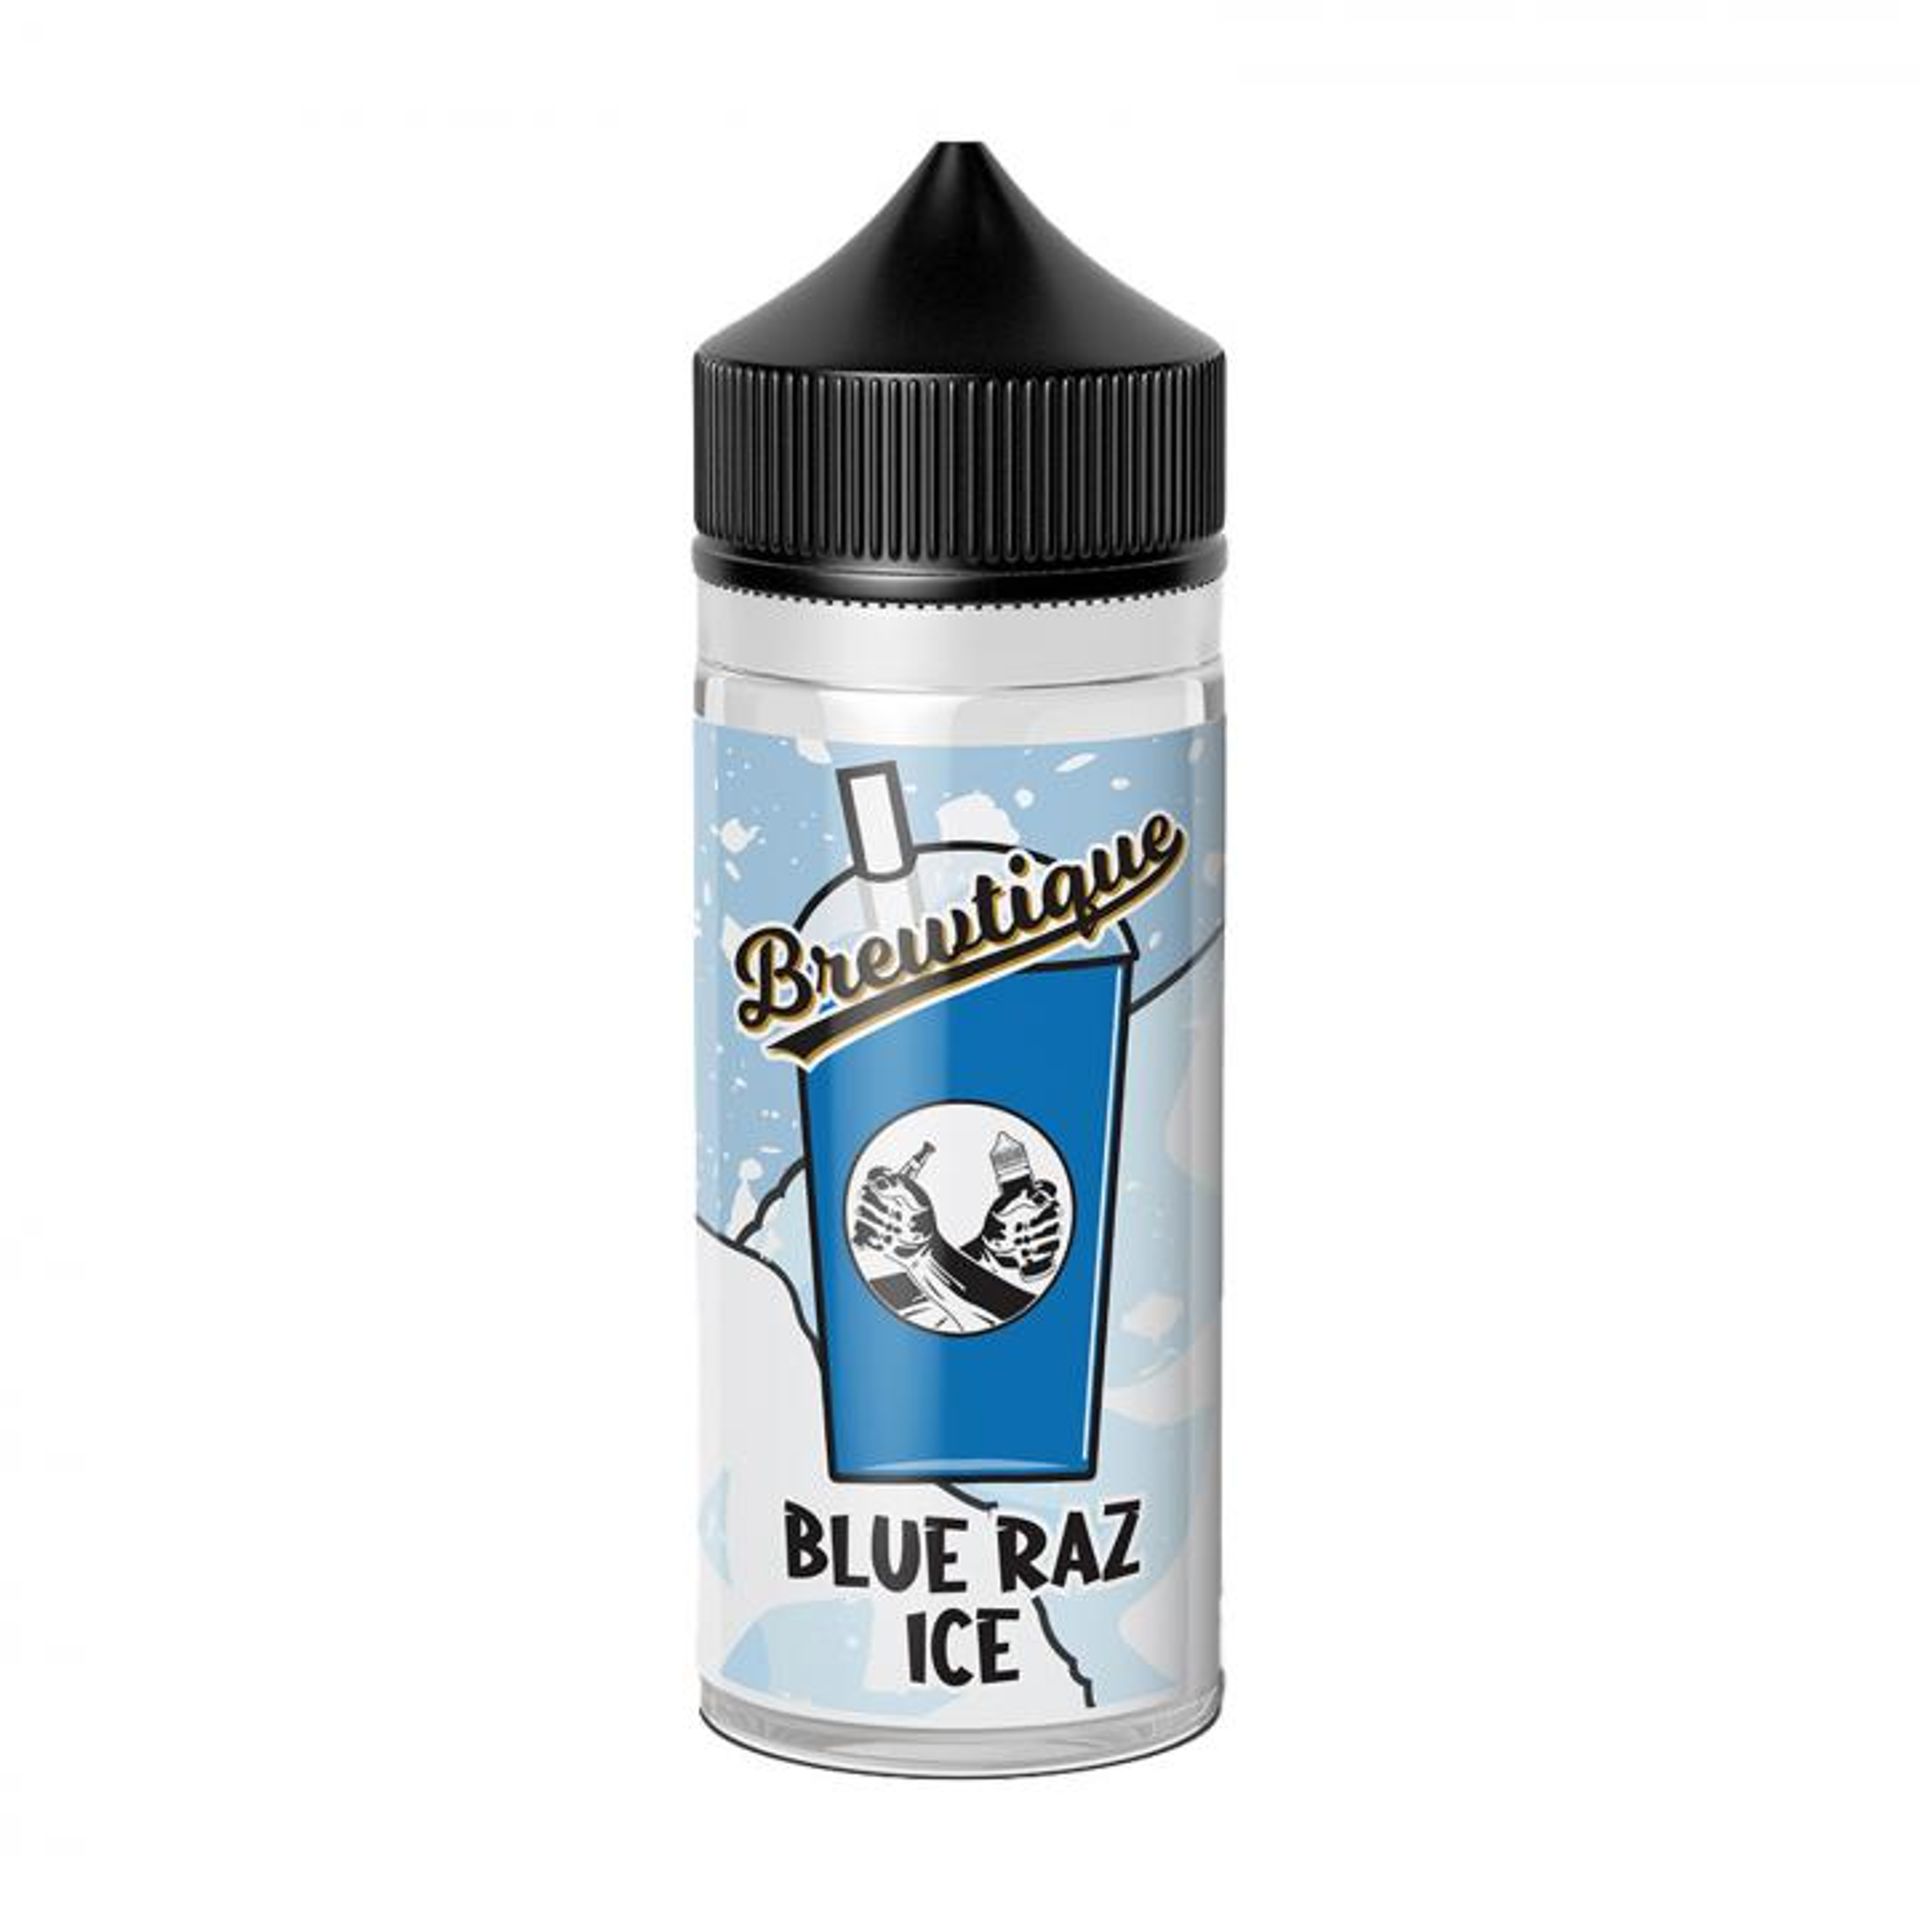 Image of Blue Raz Ice by Brewtique